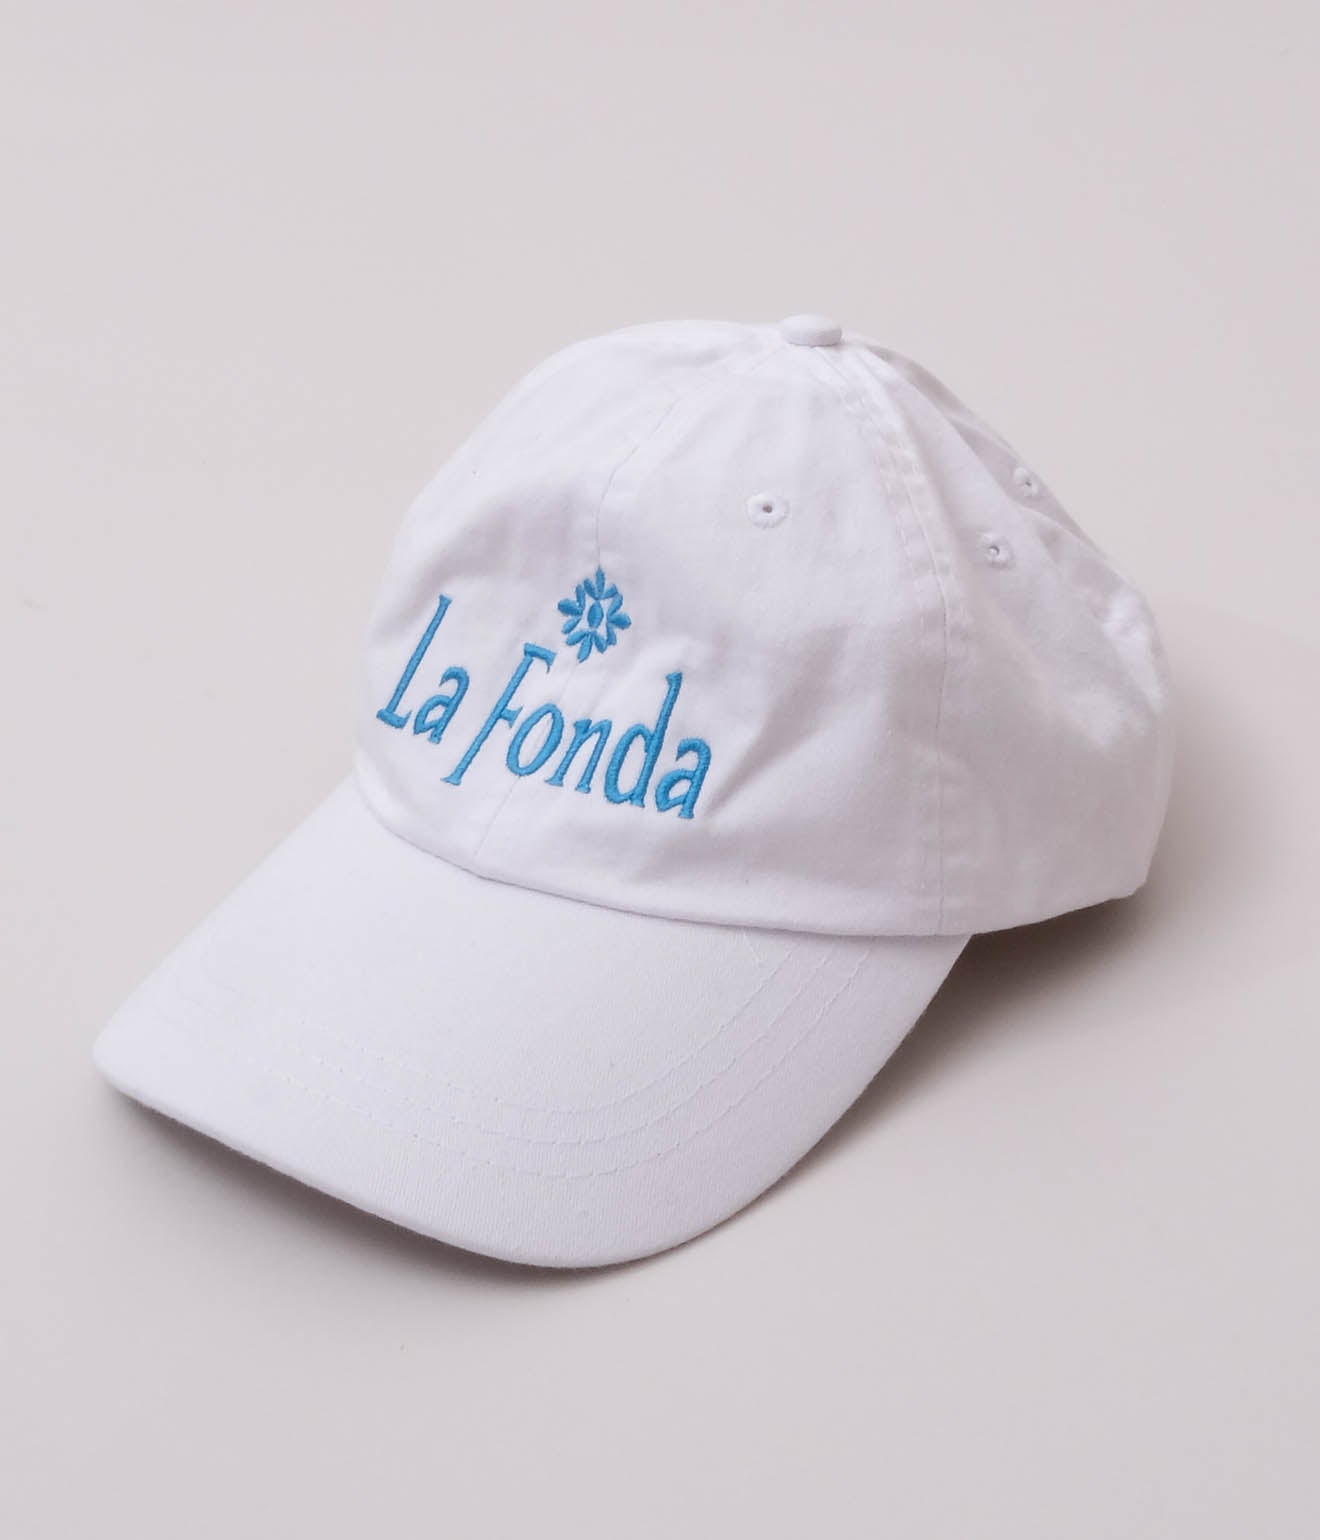 Souvenir Goods "La Fonda Hotel Cap" (White)